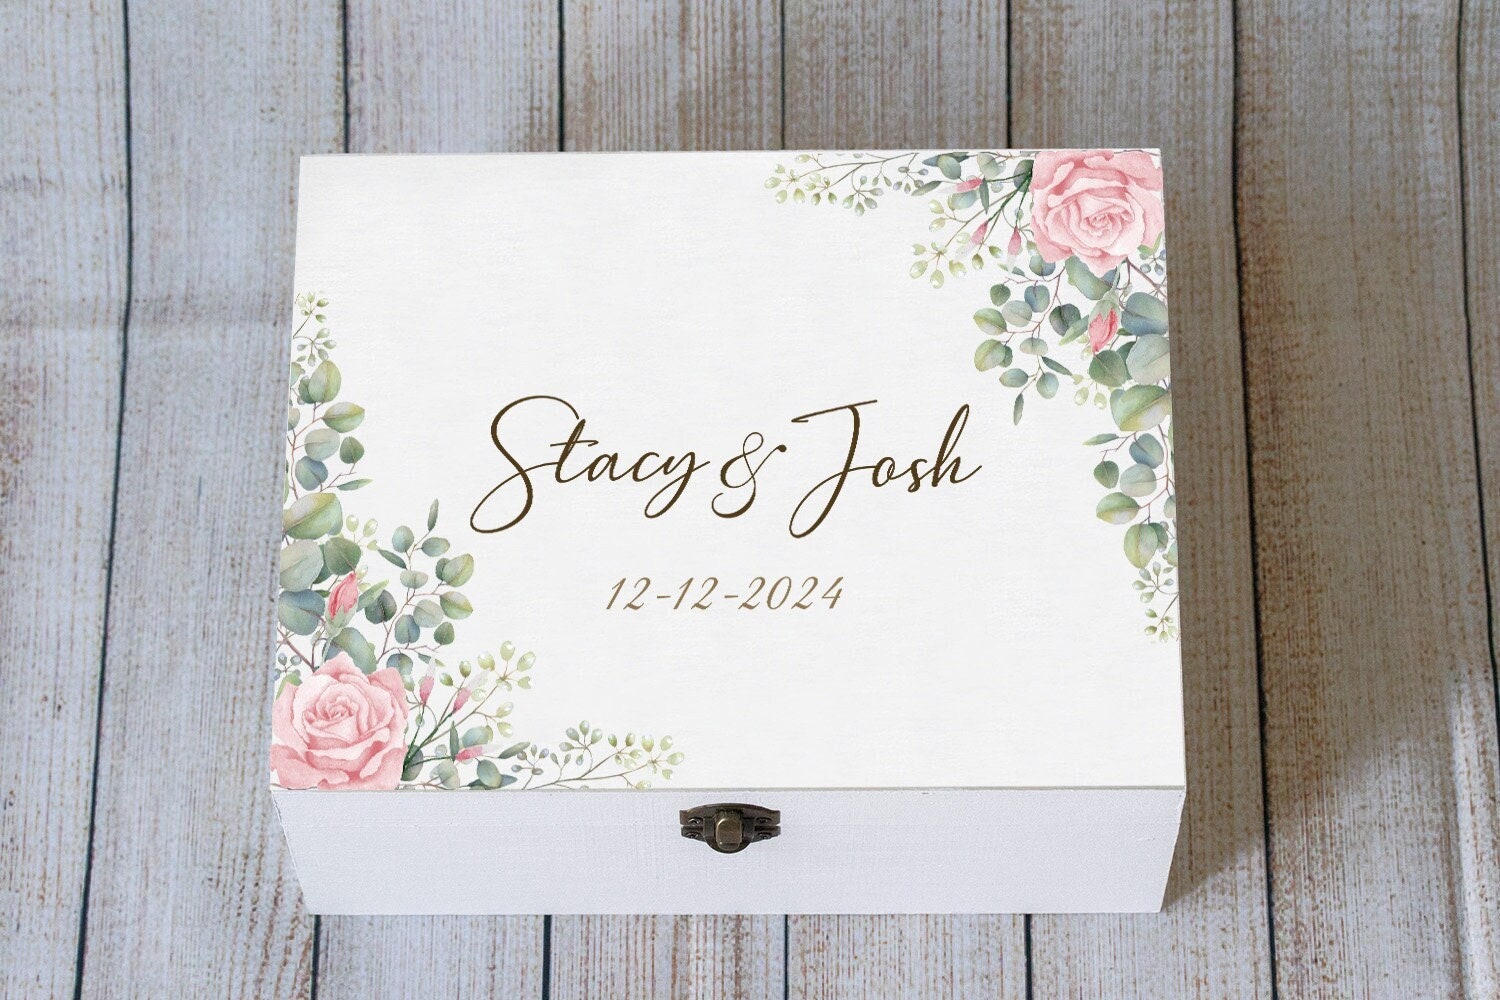 Lesixur 8”Card Box, boho Floral Cards Receiving Box, For Birthday, Wedding,  Bridal or Baby Shower, E…See more Lesixur 8”Card Box, boho Floral Cards